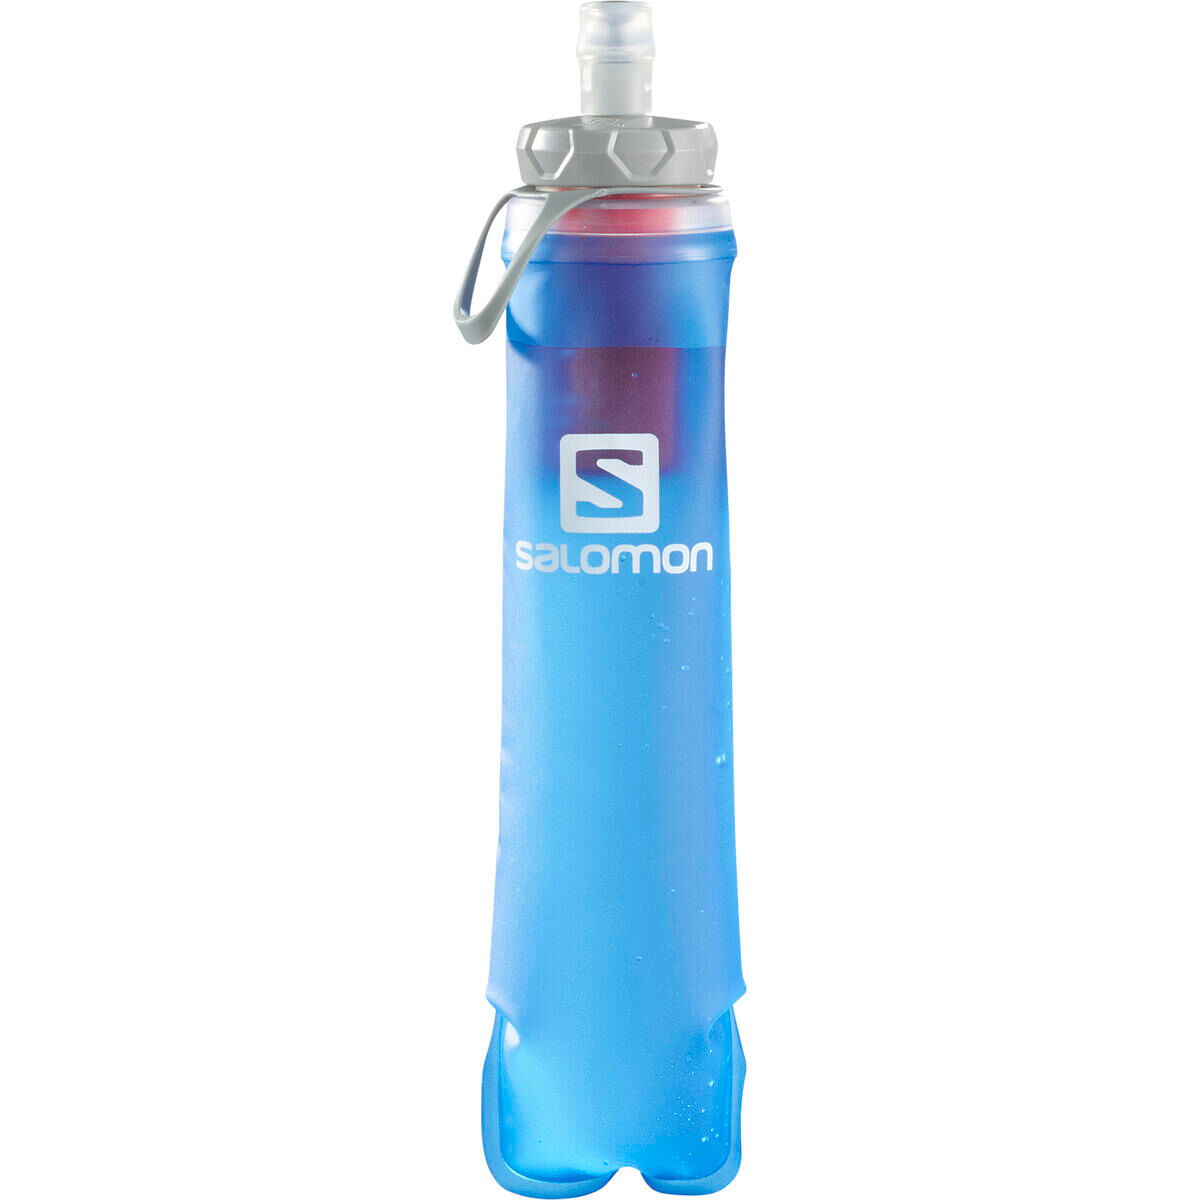 Salomon Soft Flask 500 ml + XA filter Cap - Filtration System - Water filter